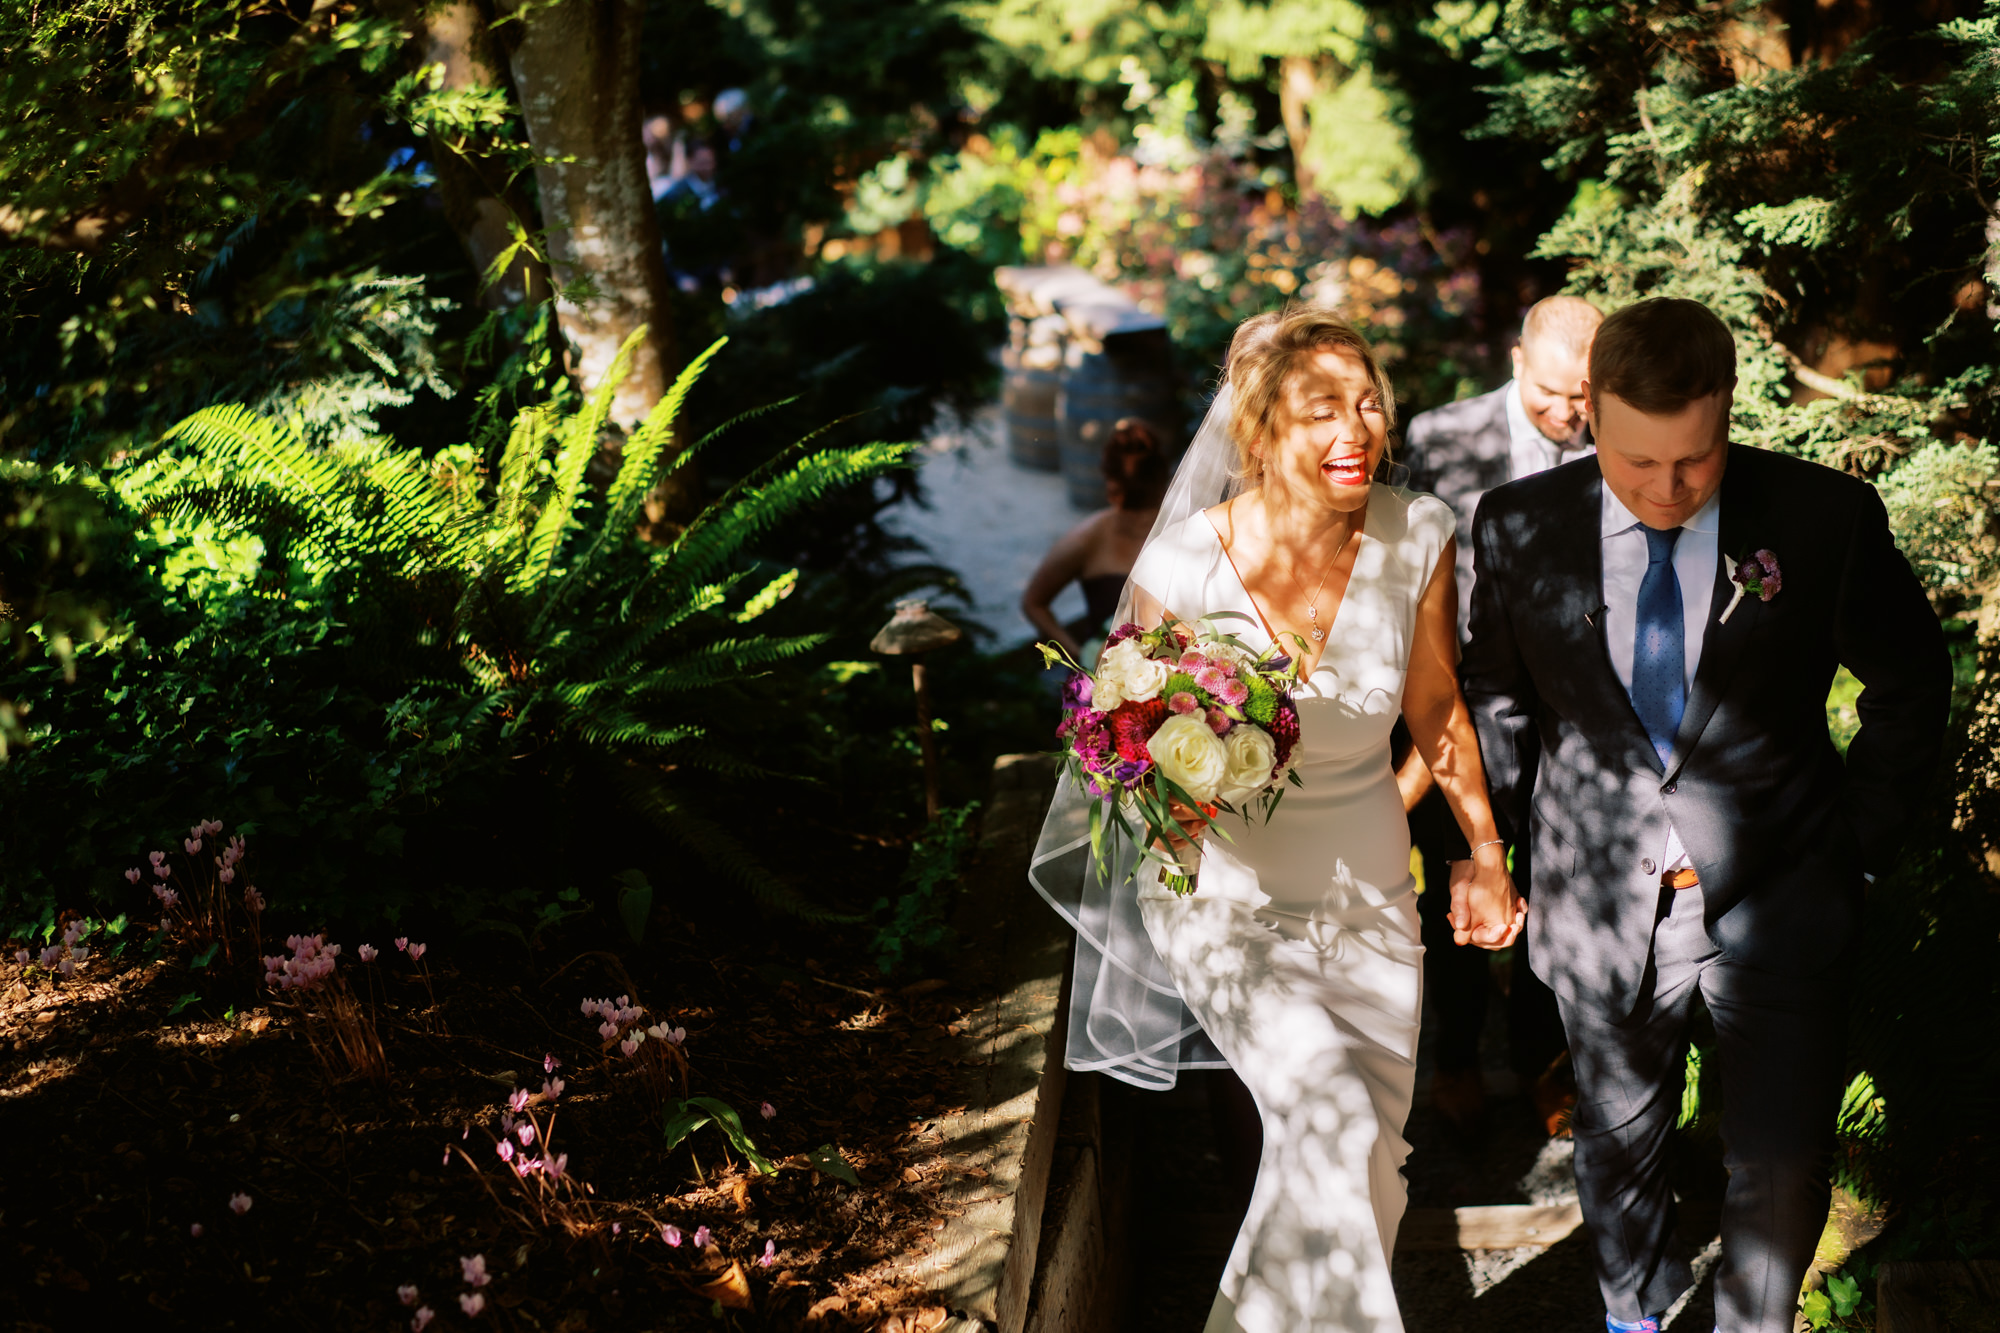 Jm Cellars Wedding: Kayley and Brian married!